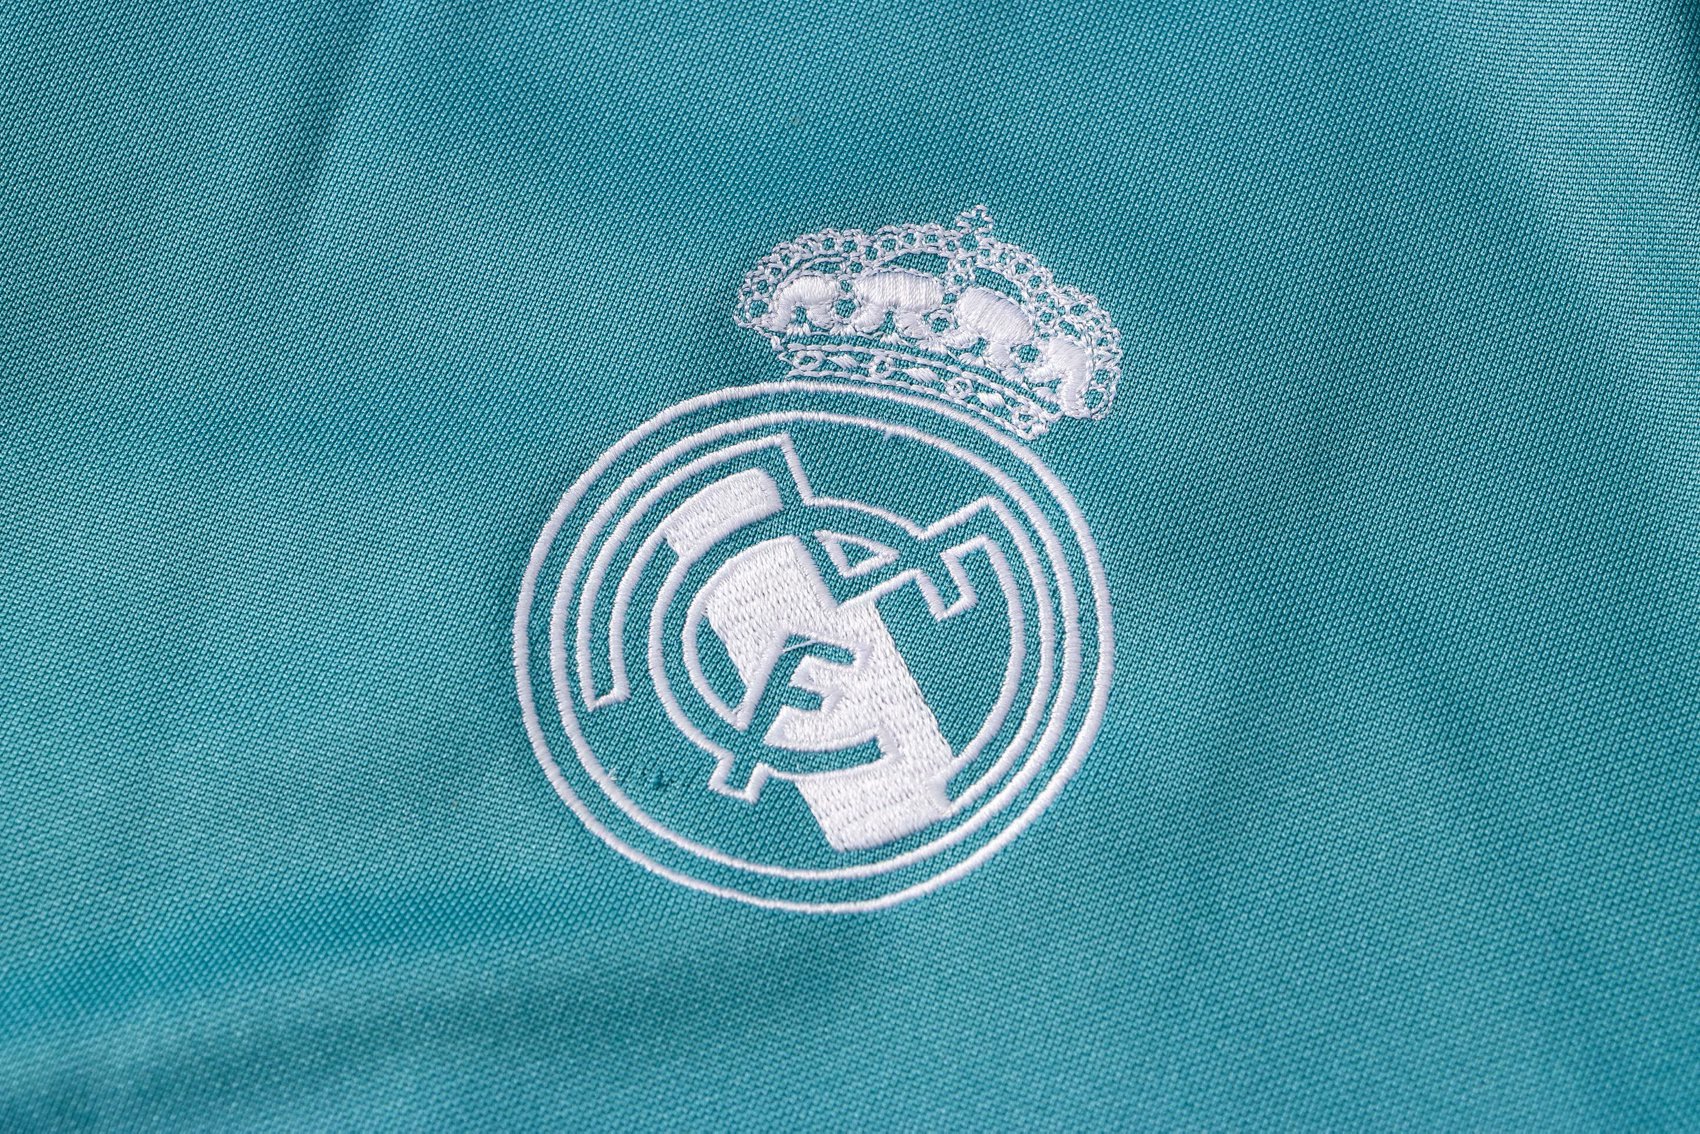 Real Madrid Green Training Suit (Jacket + Pants) Mens 2021/22